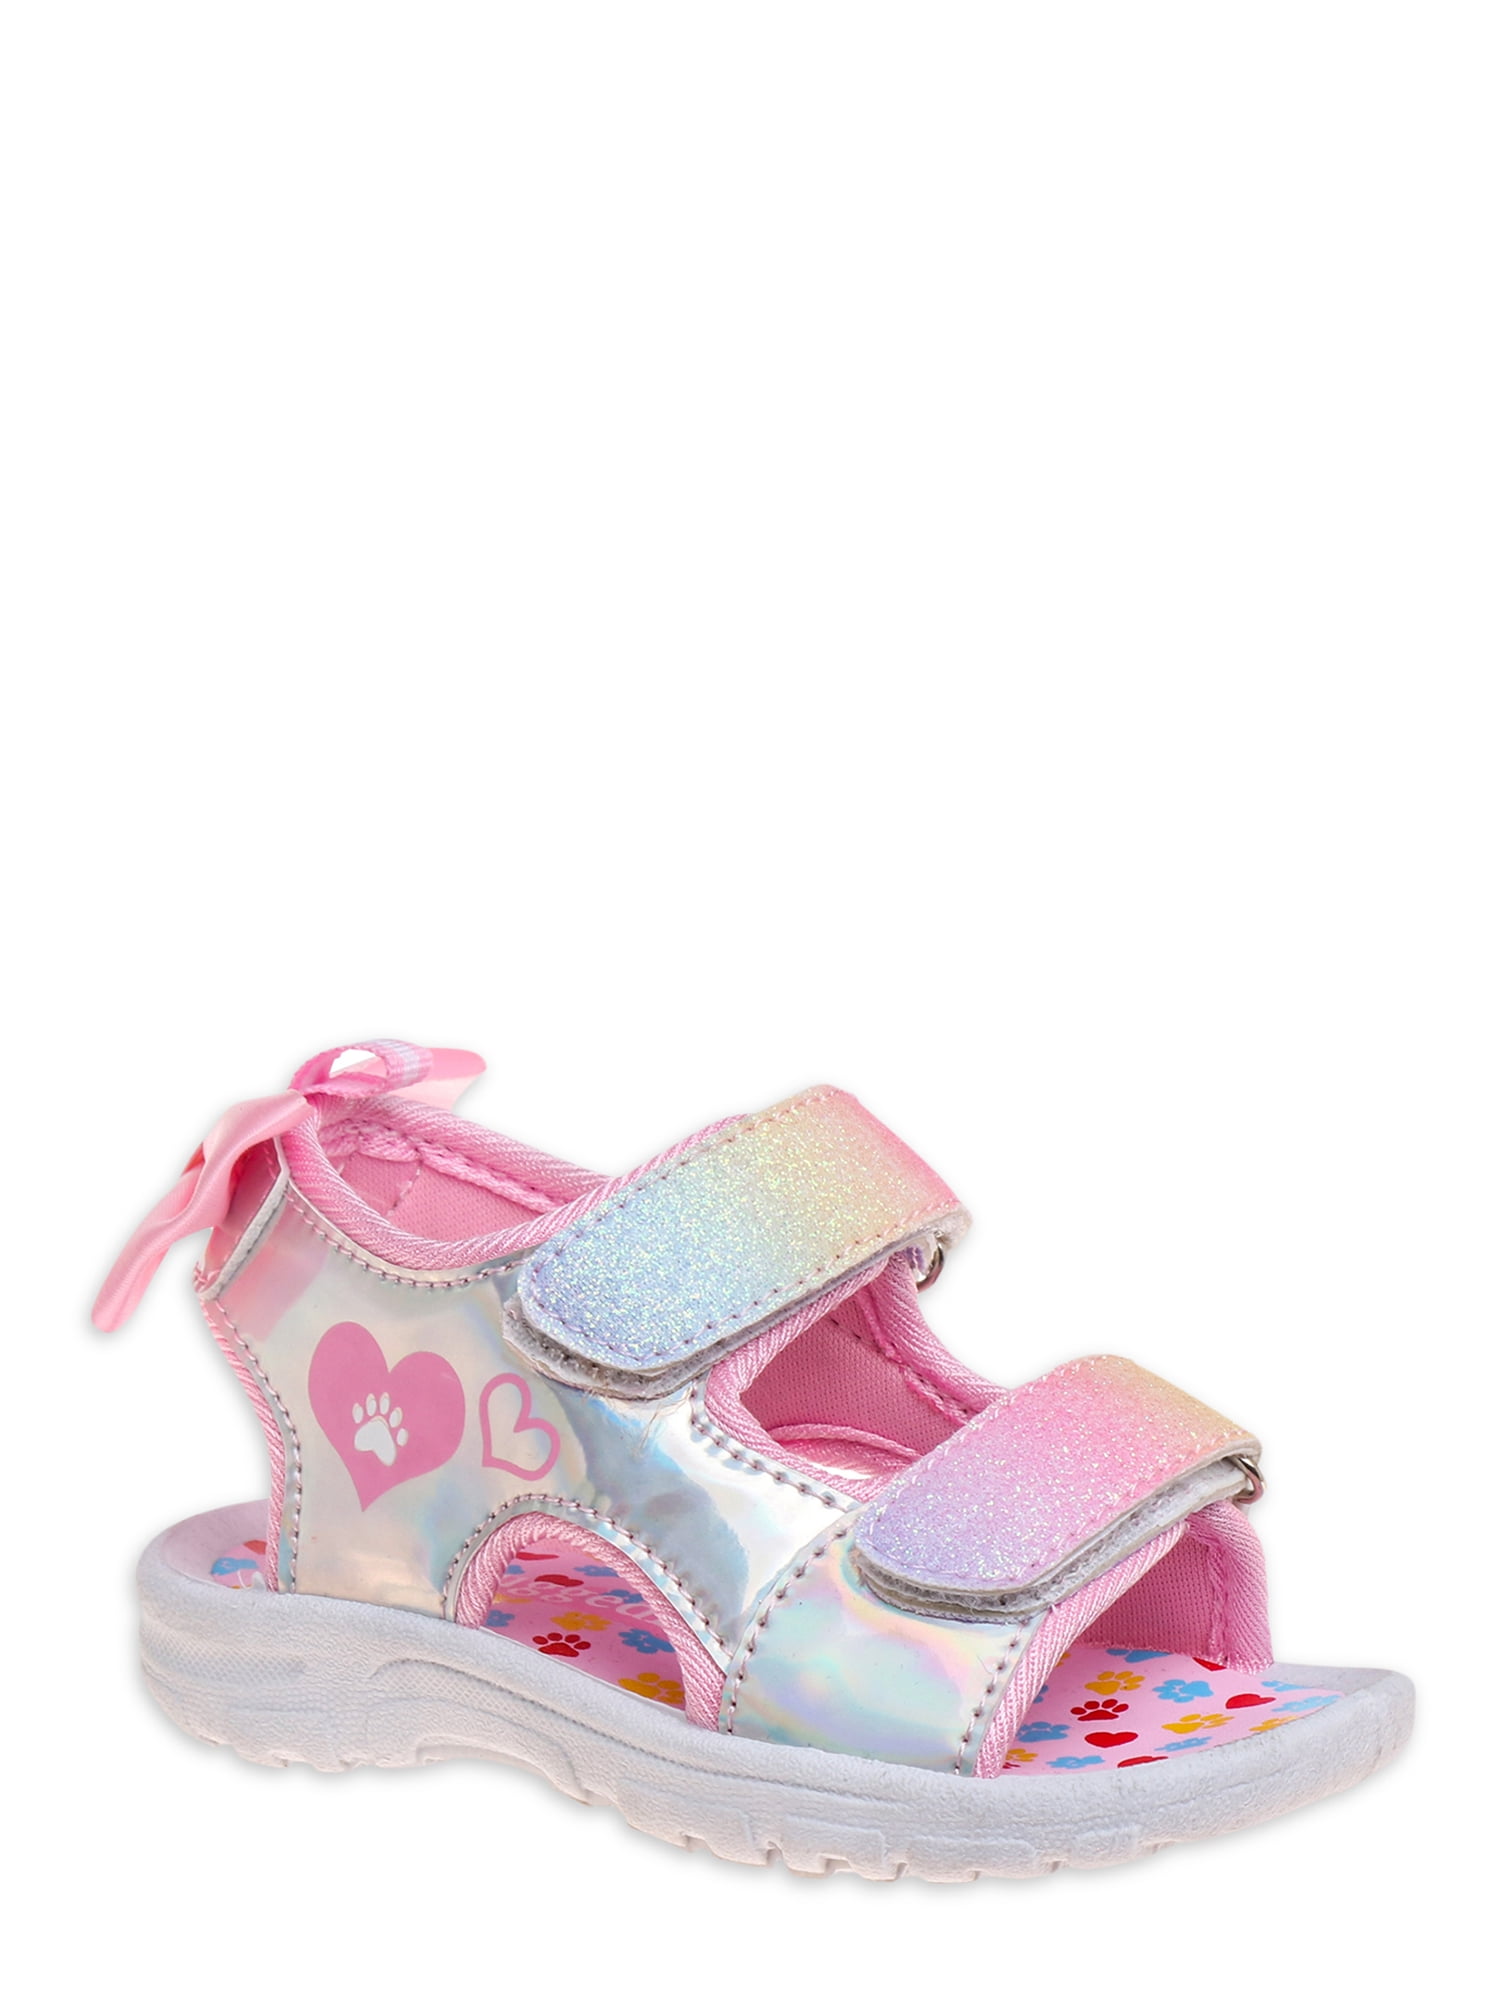 Rugged Bear Toddler Girls Bow Tie Sandals, Sizes 5-10 - Walmart.com